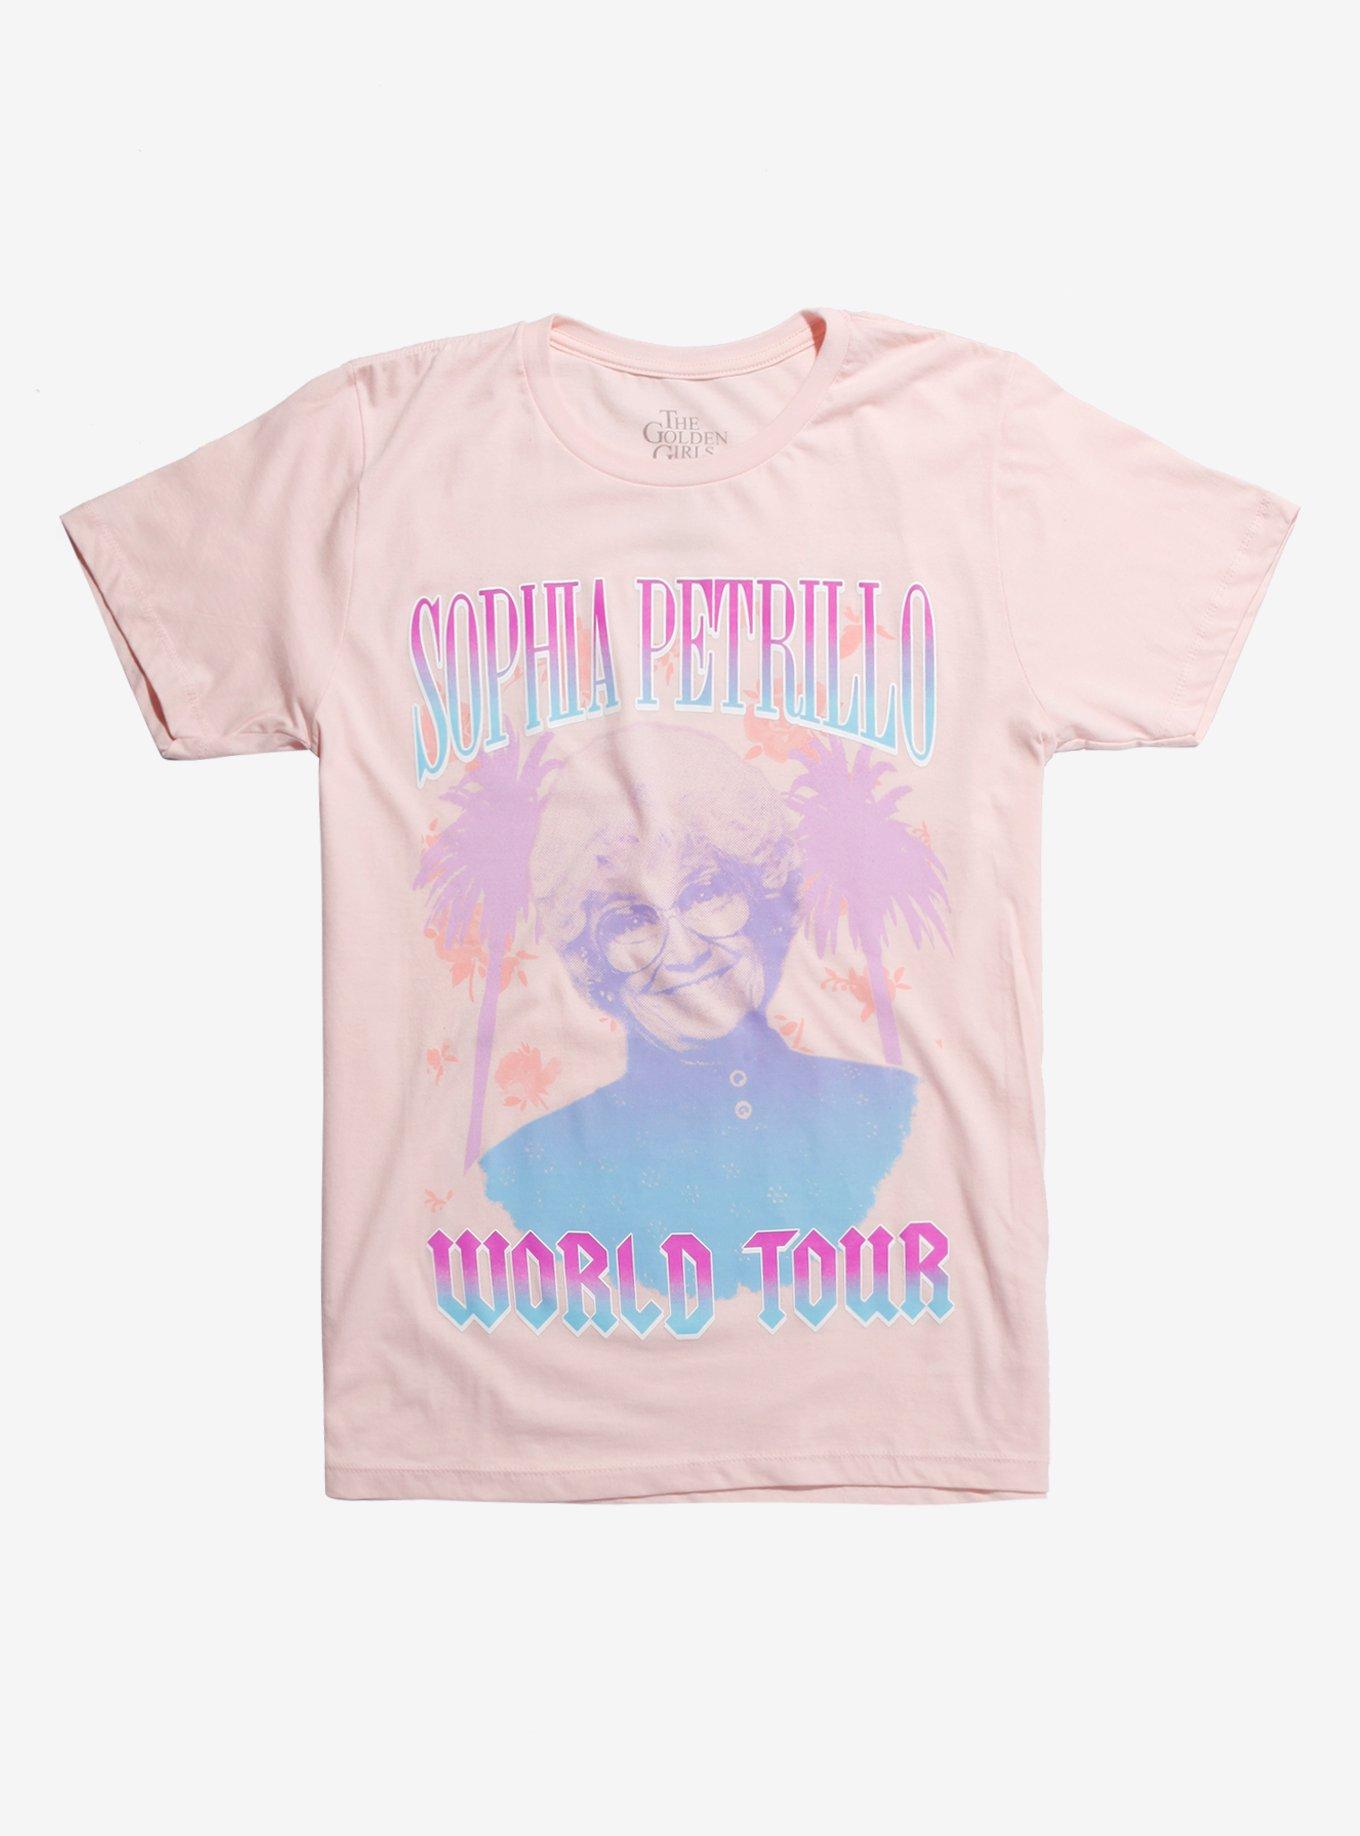 Golden Girls Sophia Petrillo World Tour T-Shirt, PINK, hi-res